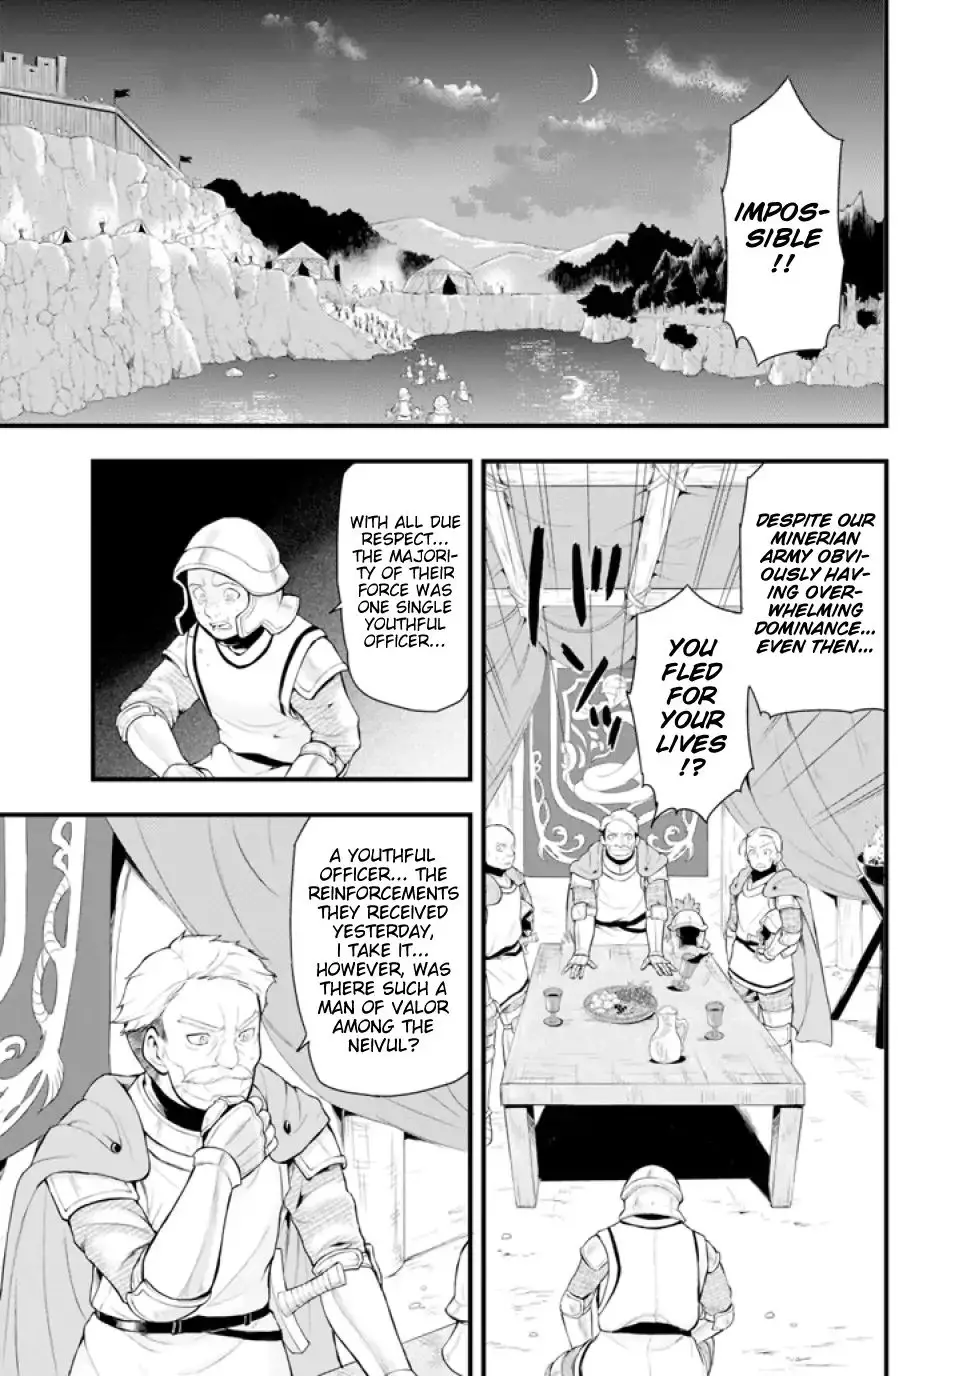 Mysterious Job Called Oda Nobunaga - 3 page 2